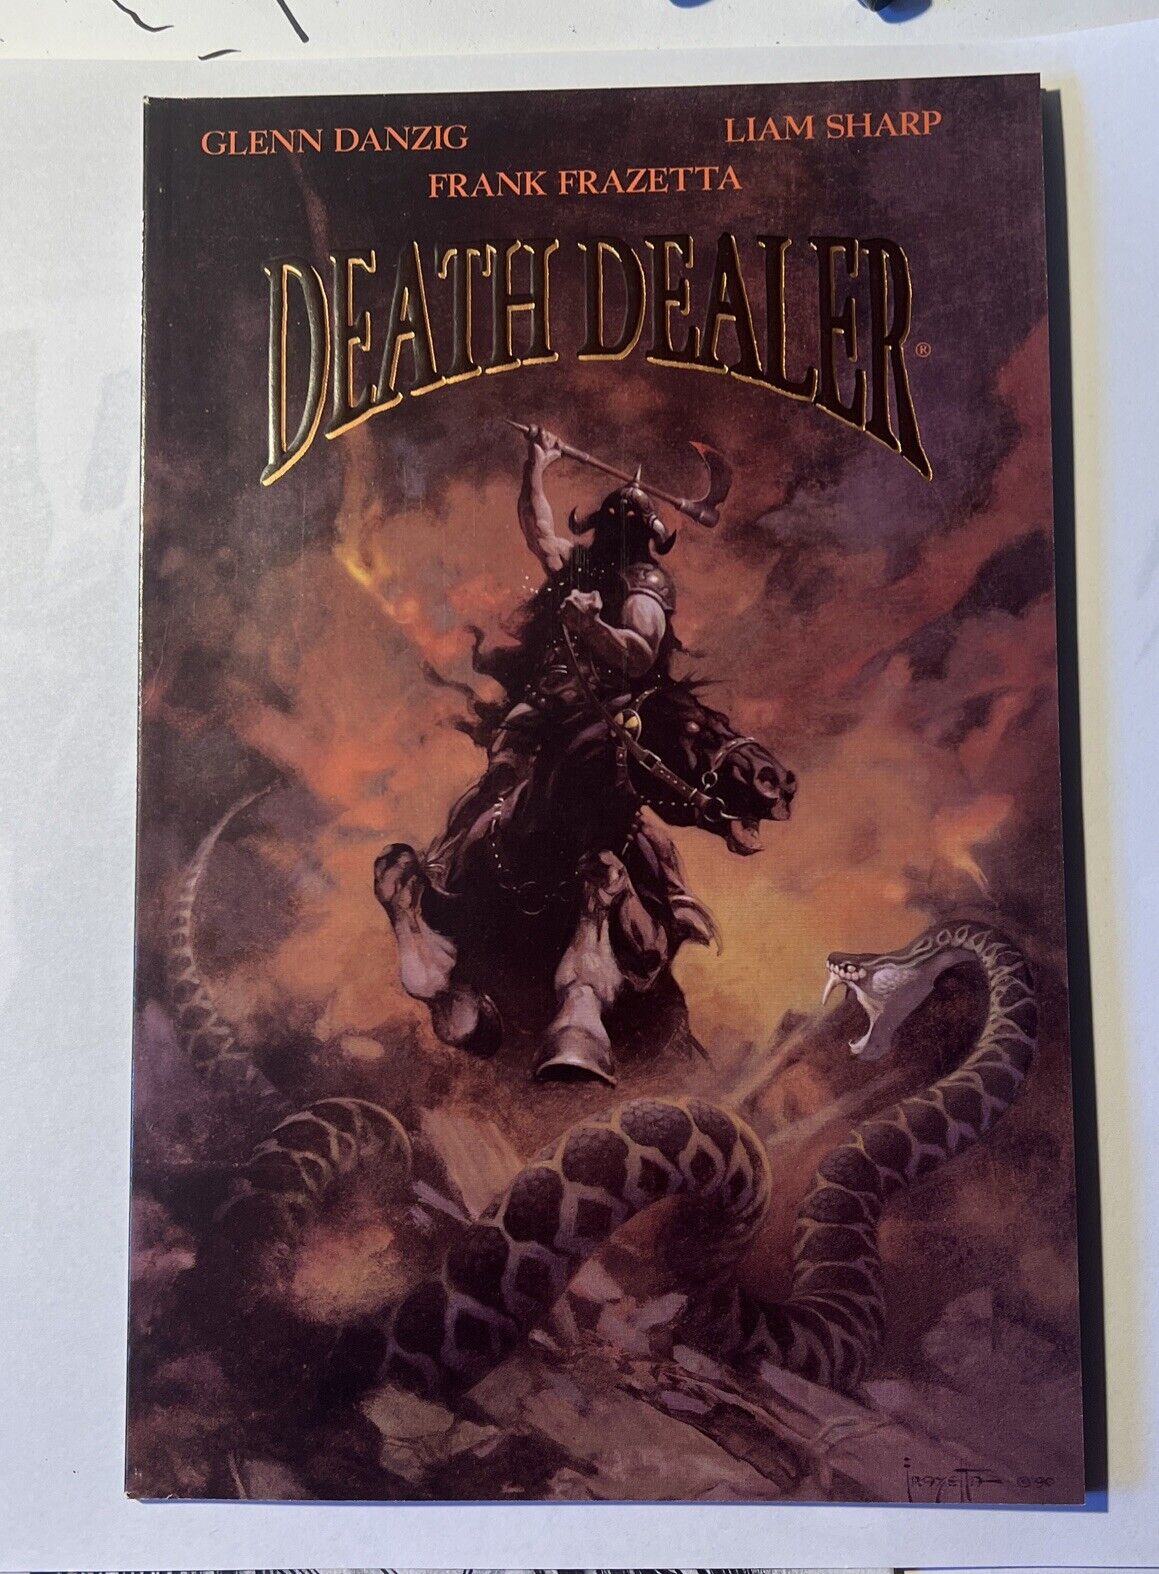 Death Dealer #2 1996 Glenn Danzig Frank Frazetta Liam Sharp 1st Print